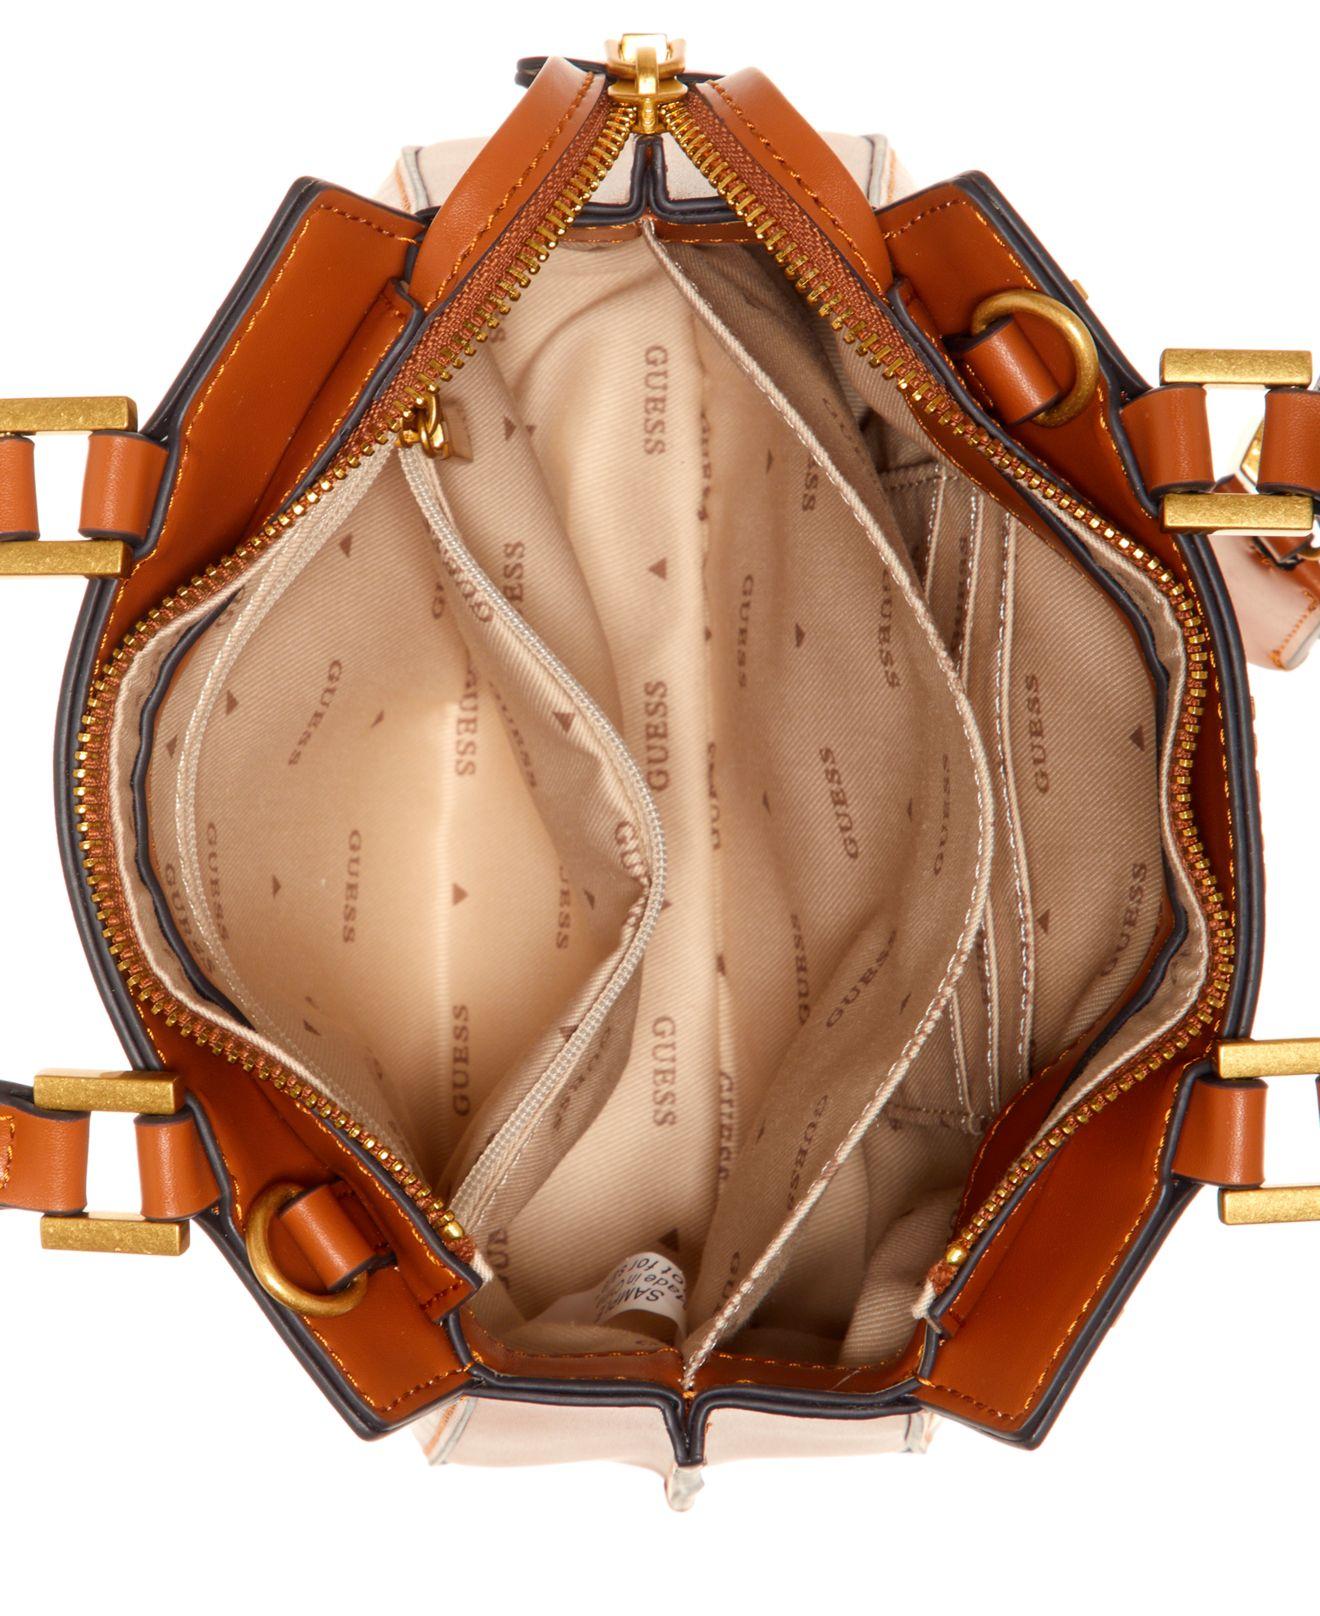 GUESS Katey Mini Top-Zip Shoulder Bag - Macy's